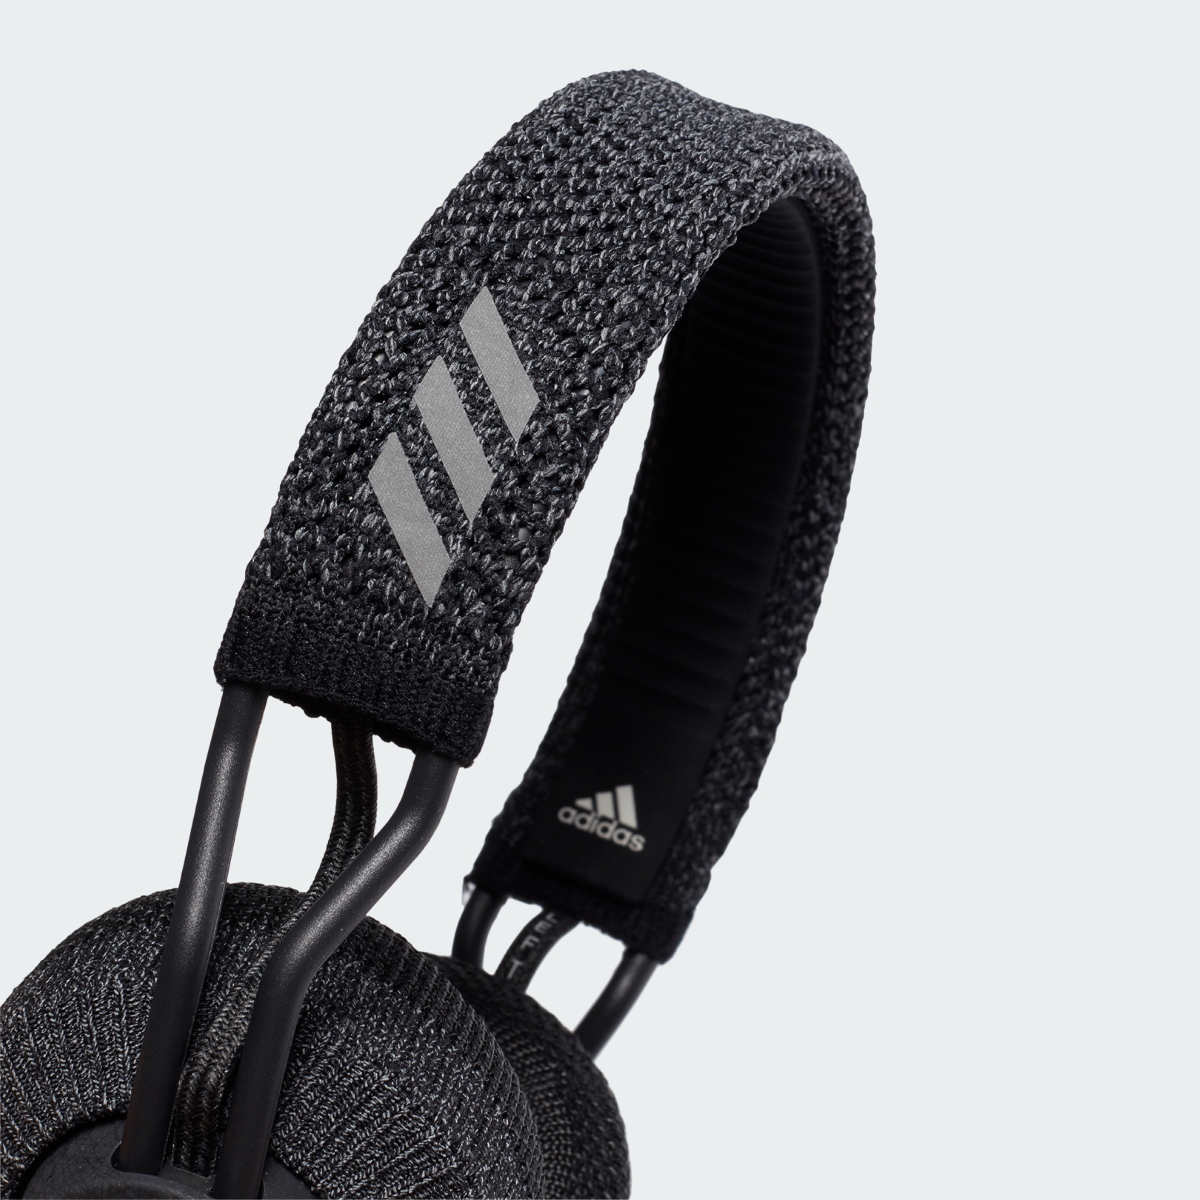 The Adidas RPT-01 Sport Headphones Can Beâ¦ Washed